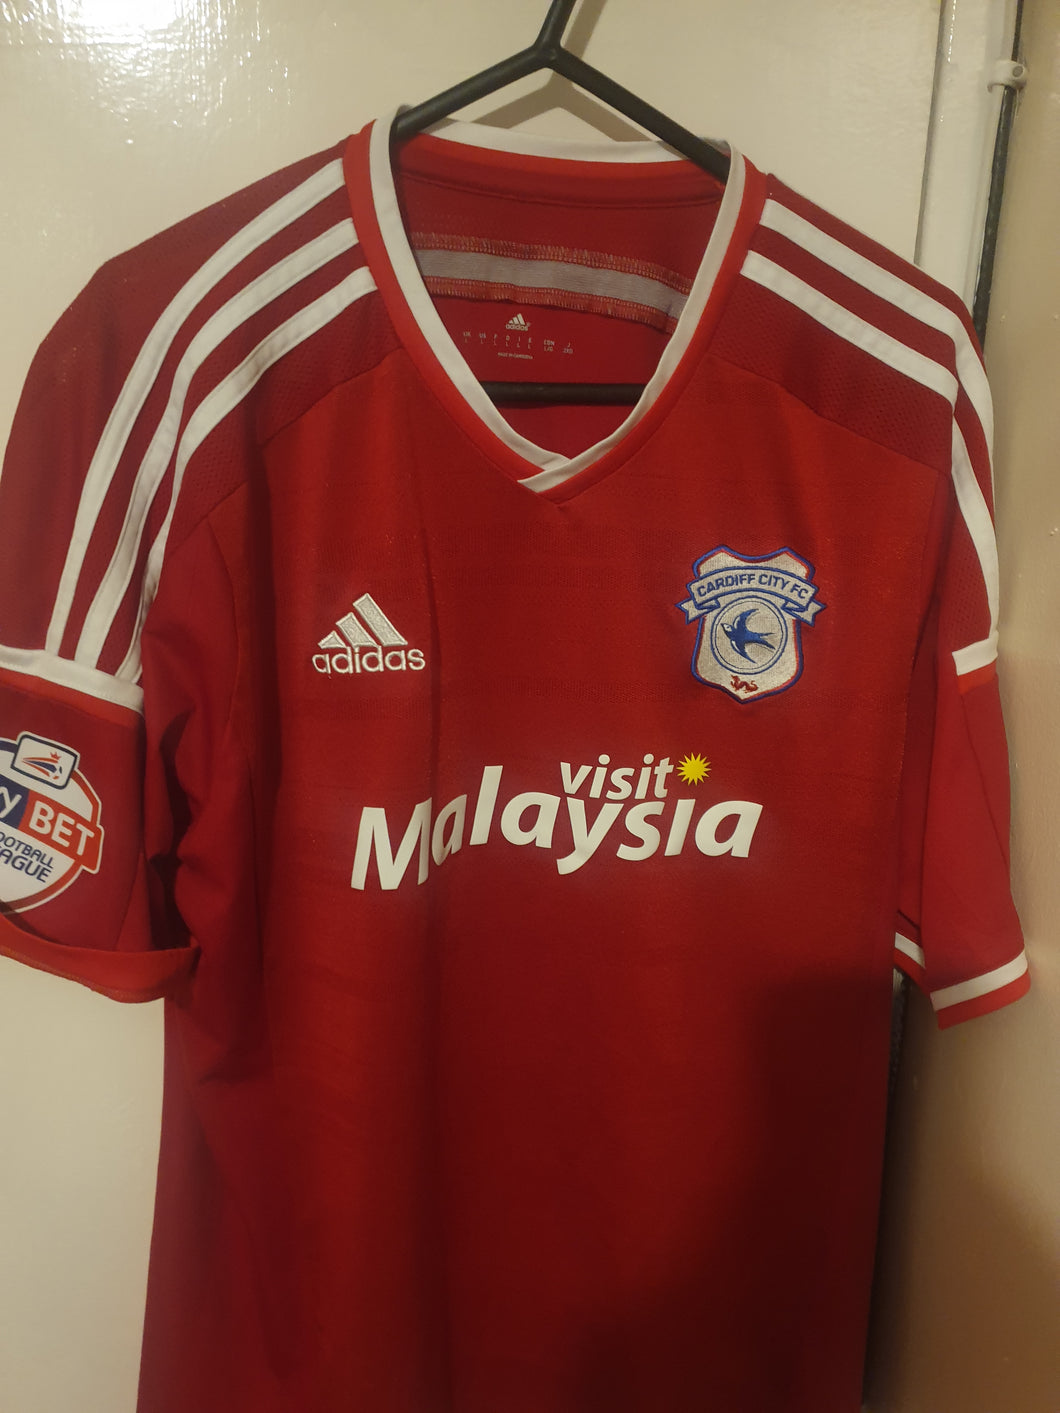 Cardiff City 2015-16 Away Shirt (Size Large)